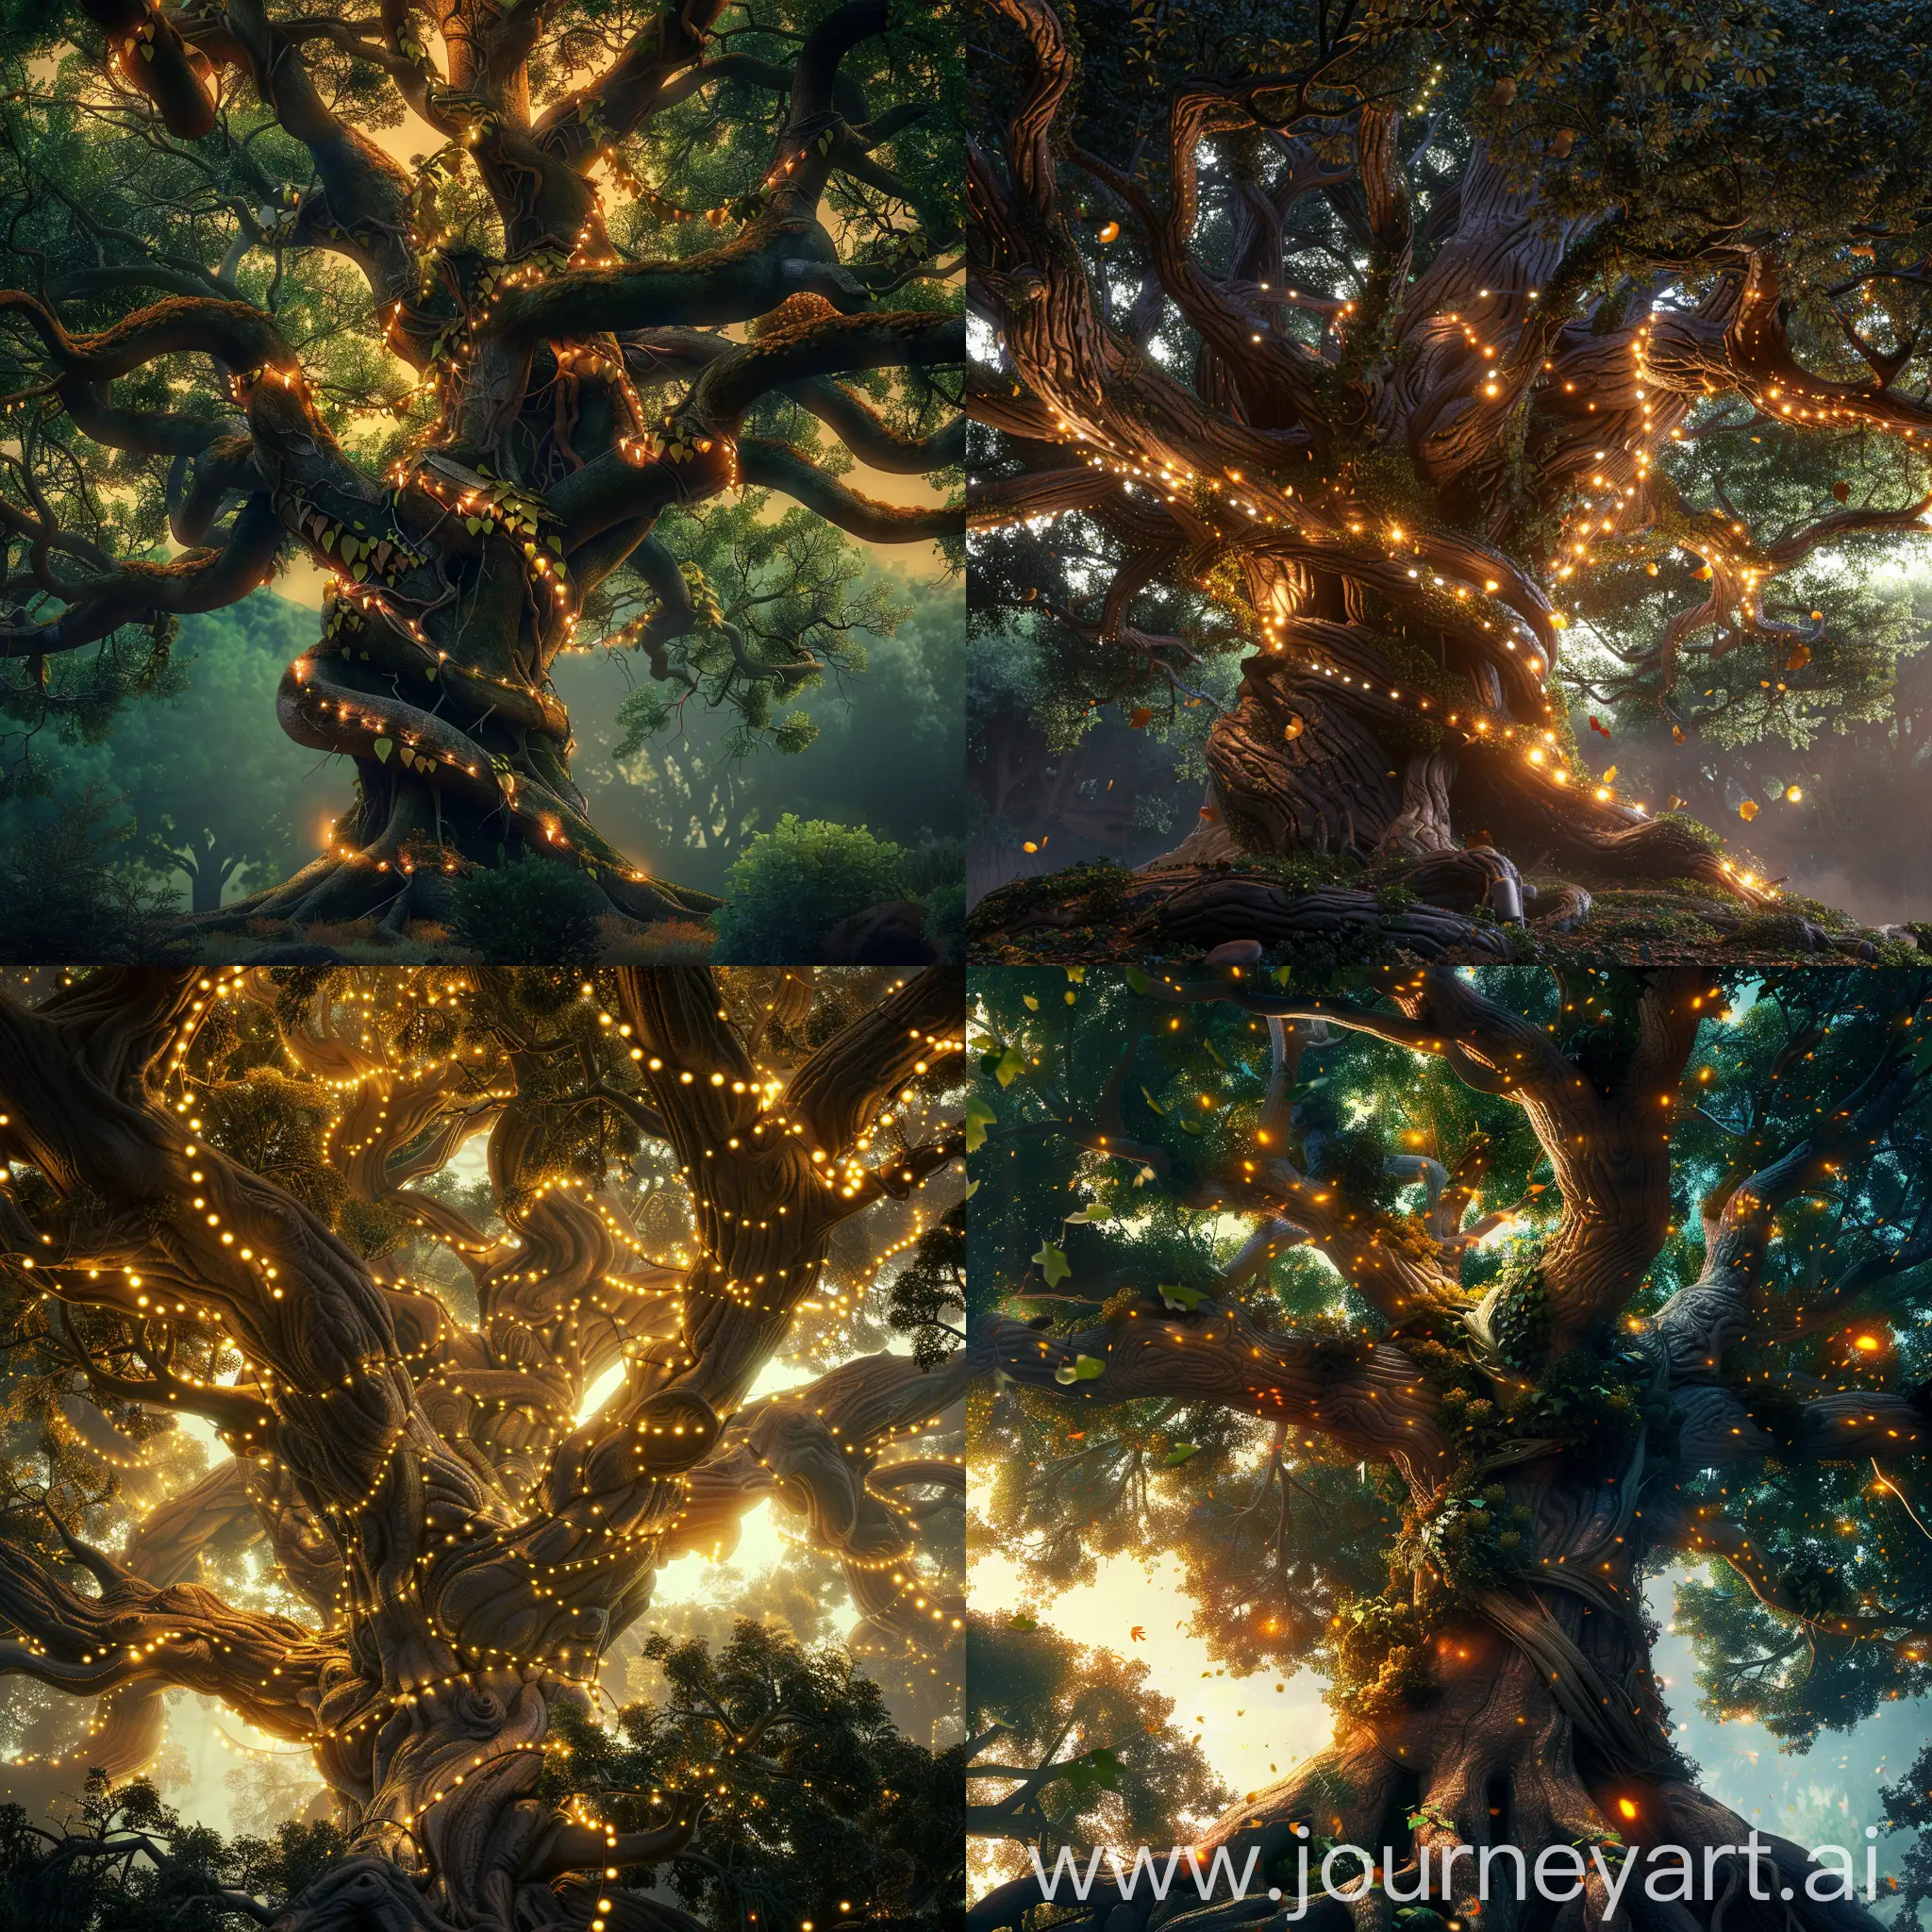 Interconnected-Tribal-Life-Under-Illuminated-Tree